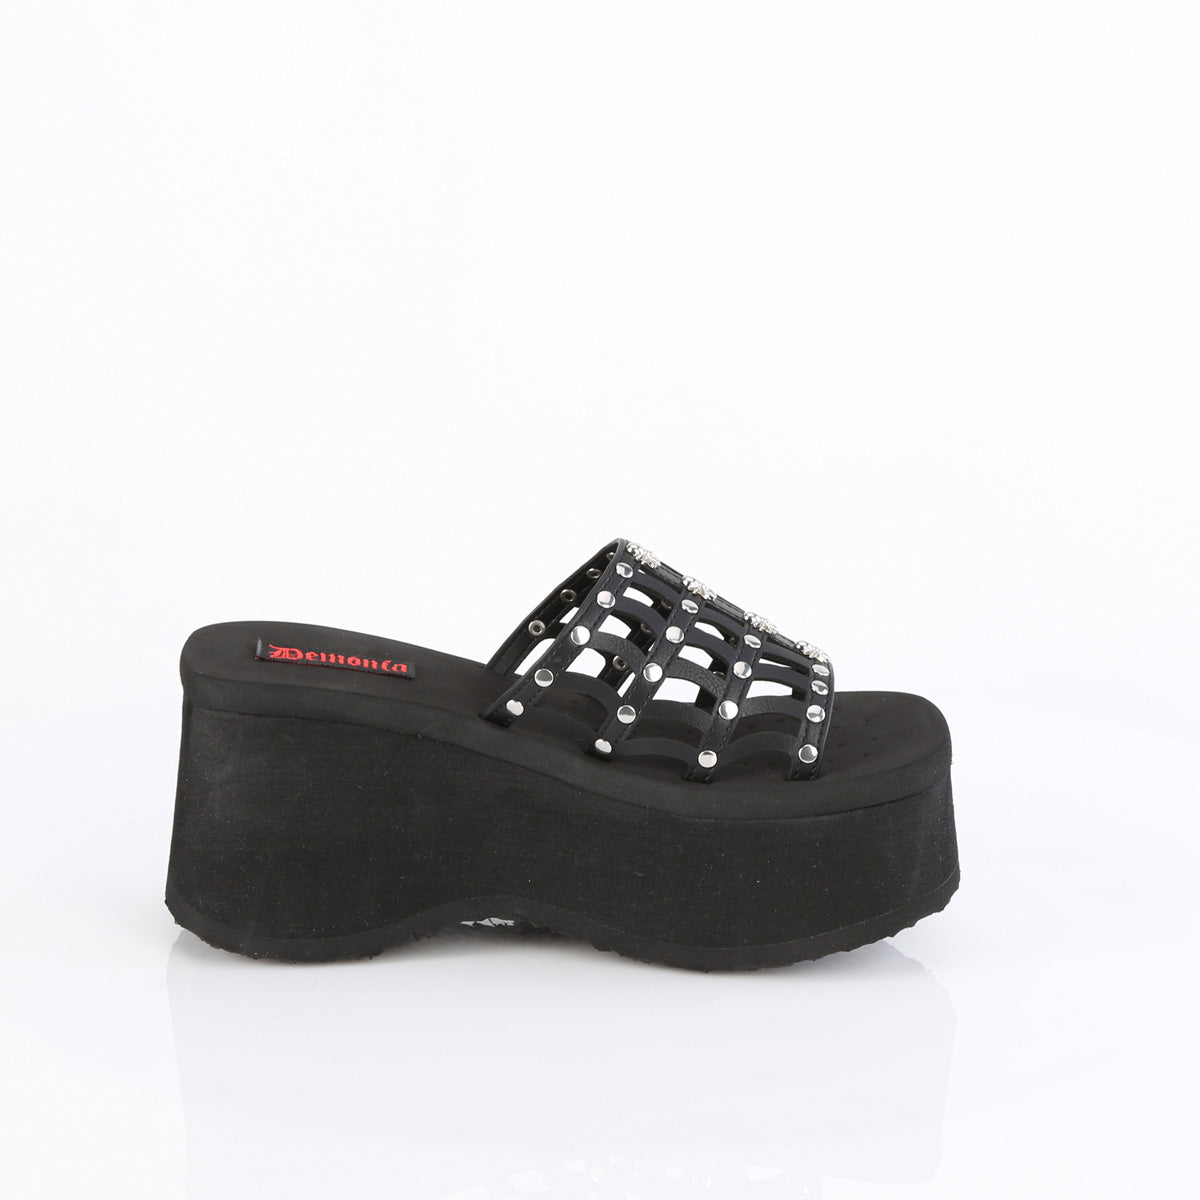 FUNN-13 Spiderweb Studded Platform Sandal Shoes by Demonia